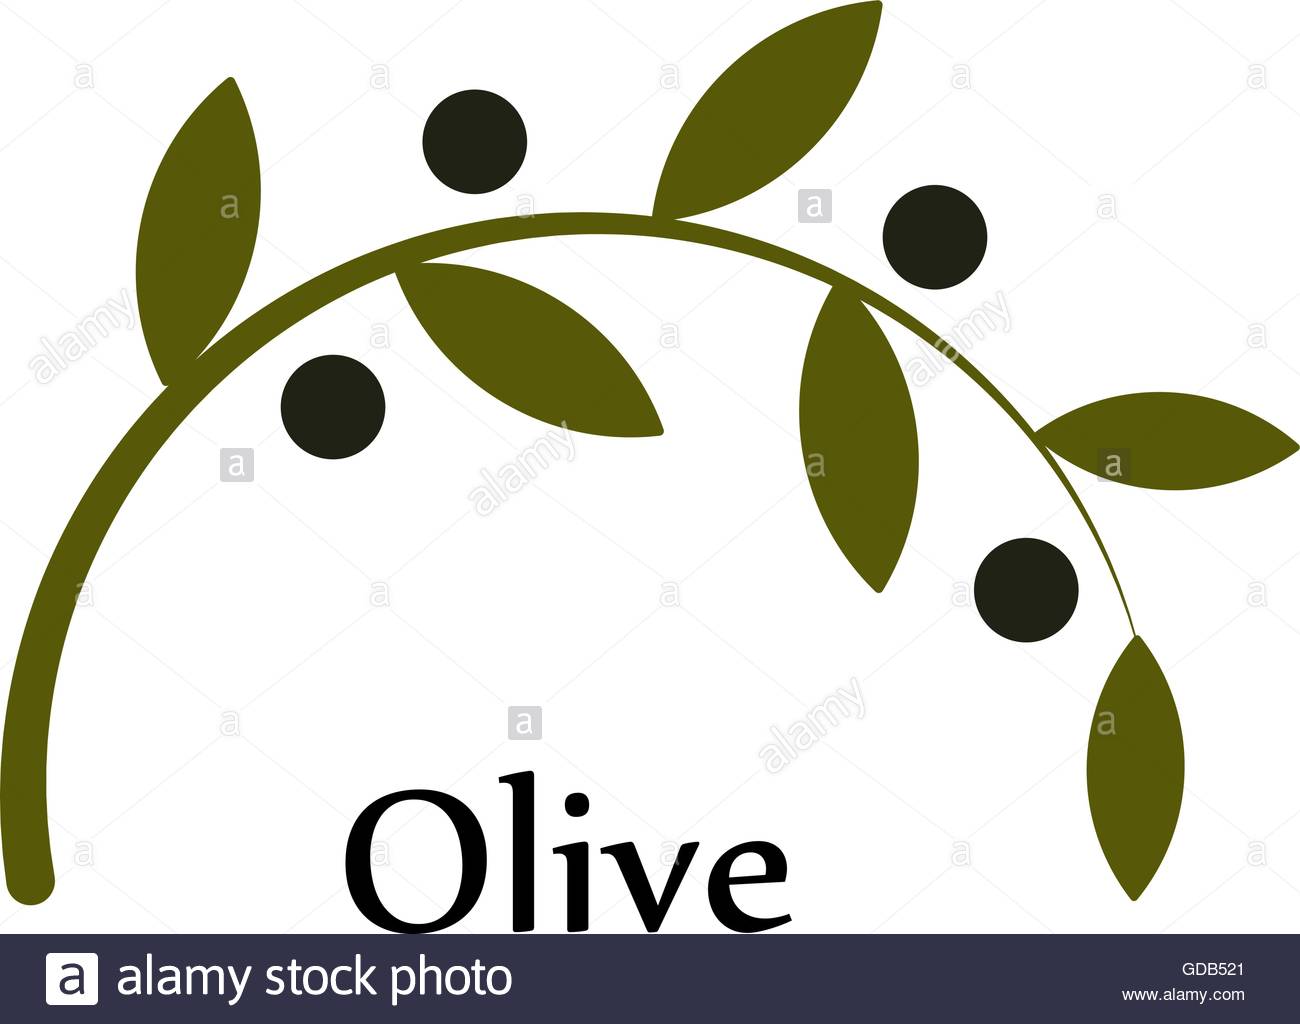 Olive icon | Myiconfinder